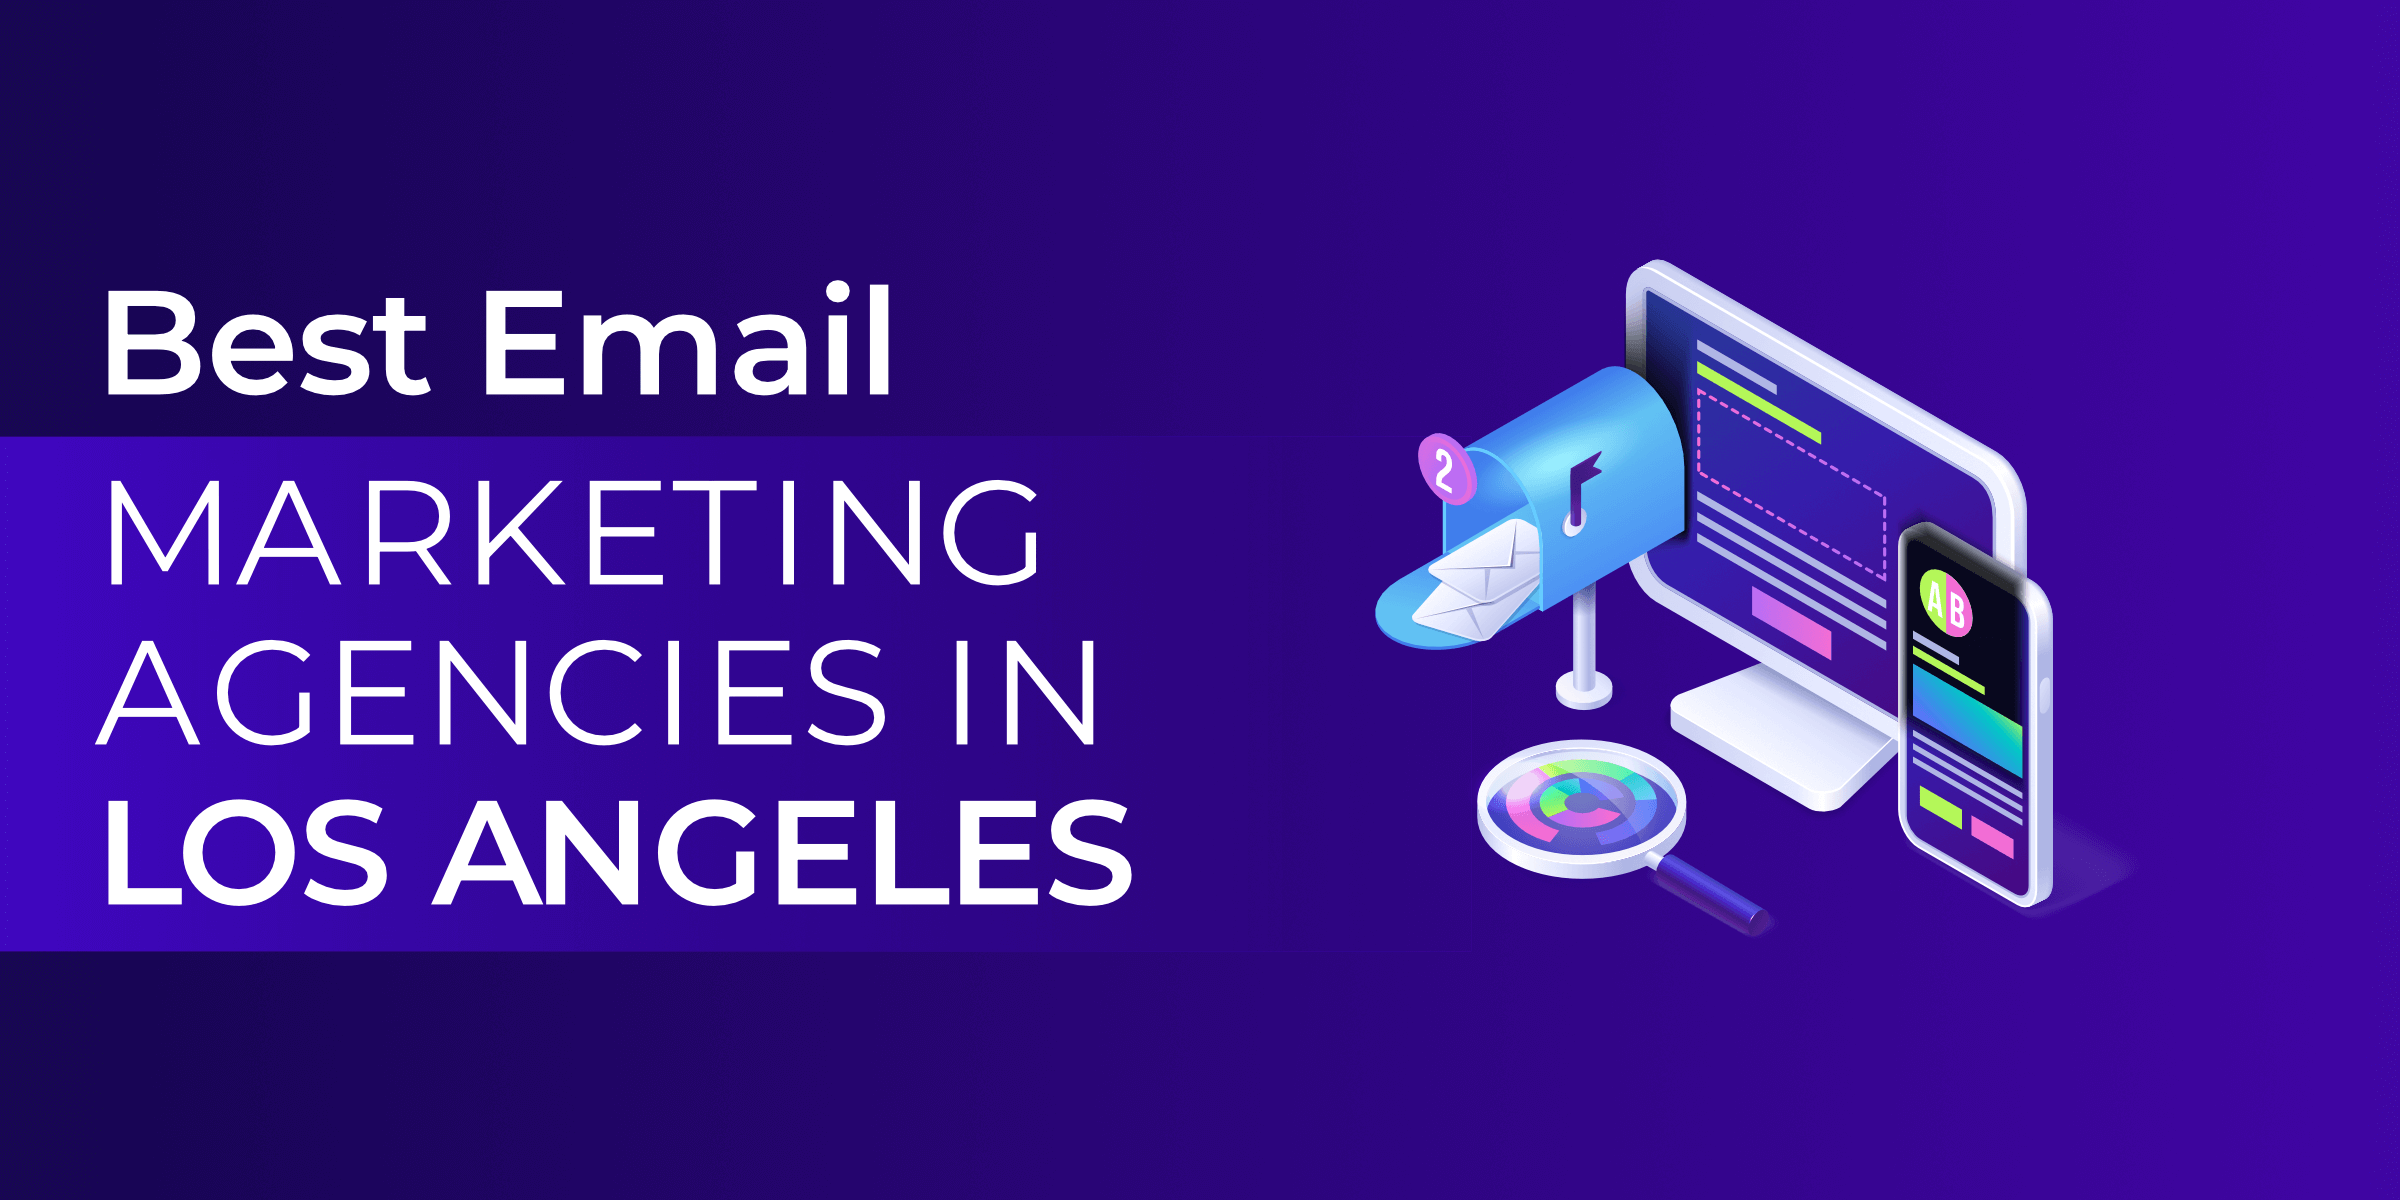 Best Email Marketing Agencies in Los Angeles